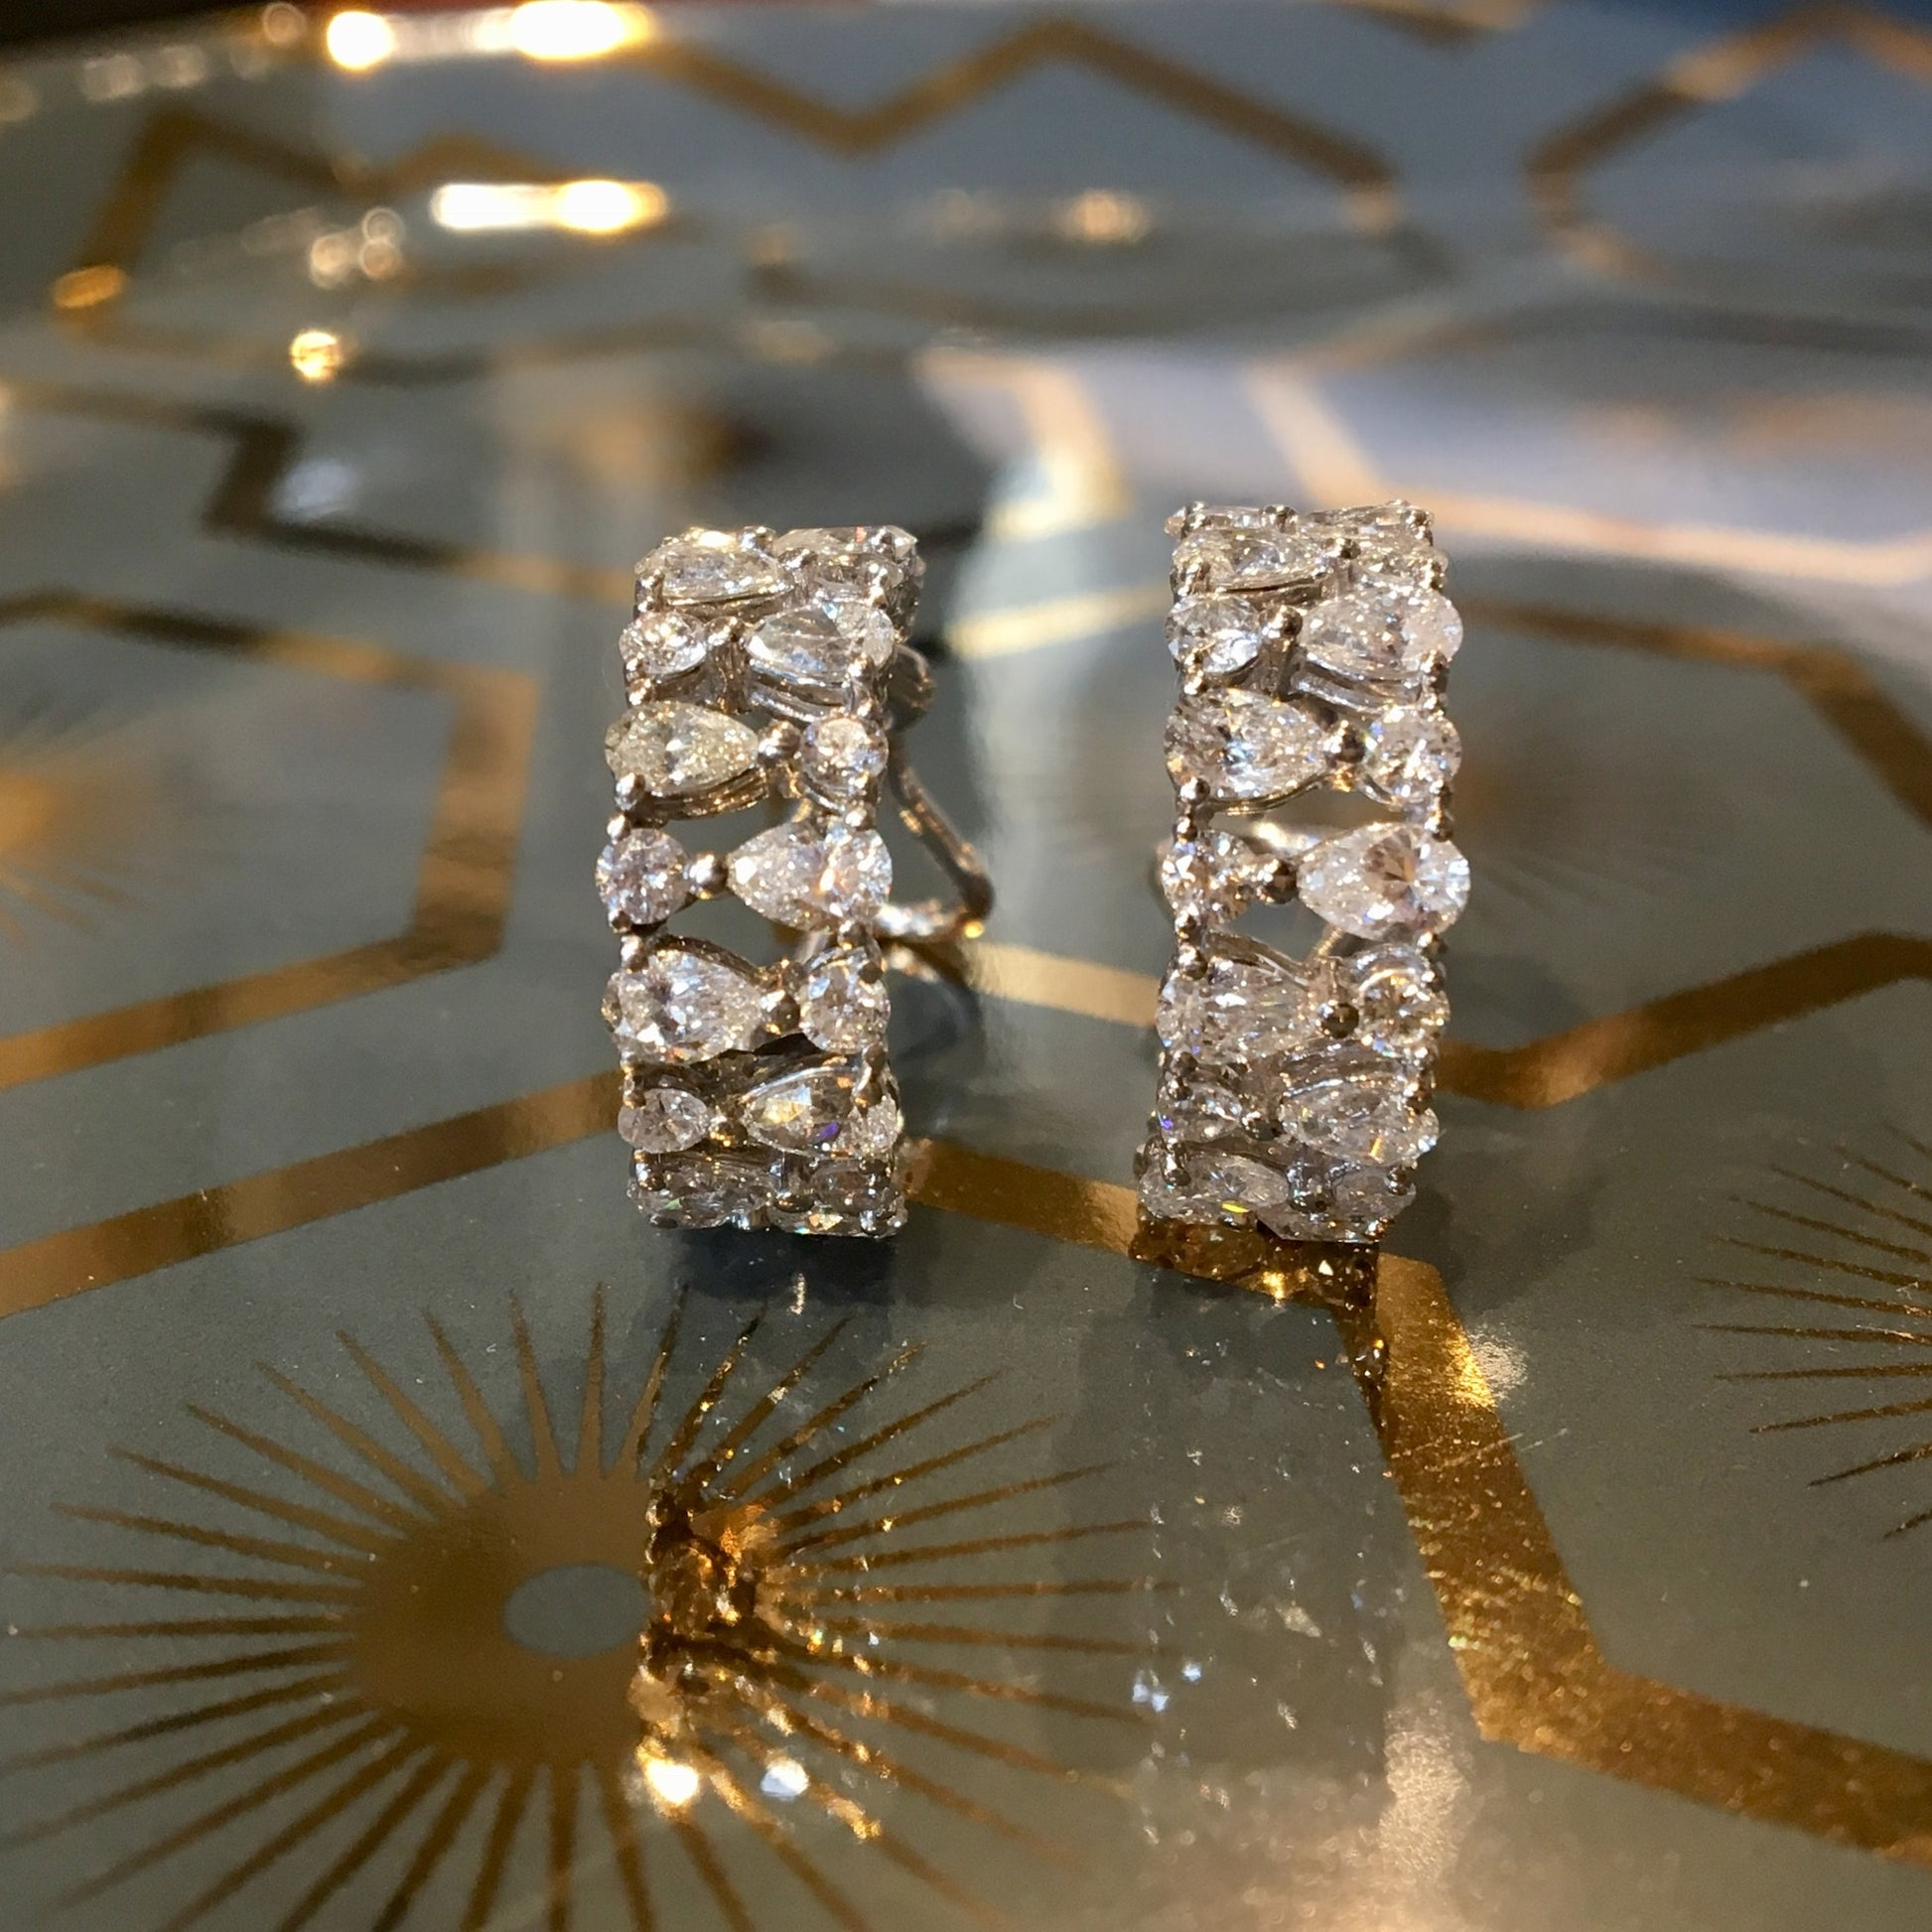 Modern Earrings 4.24 Pear & Round Brilliant Cut Diamonds in 18k White Gold